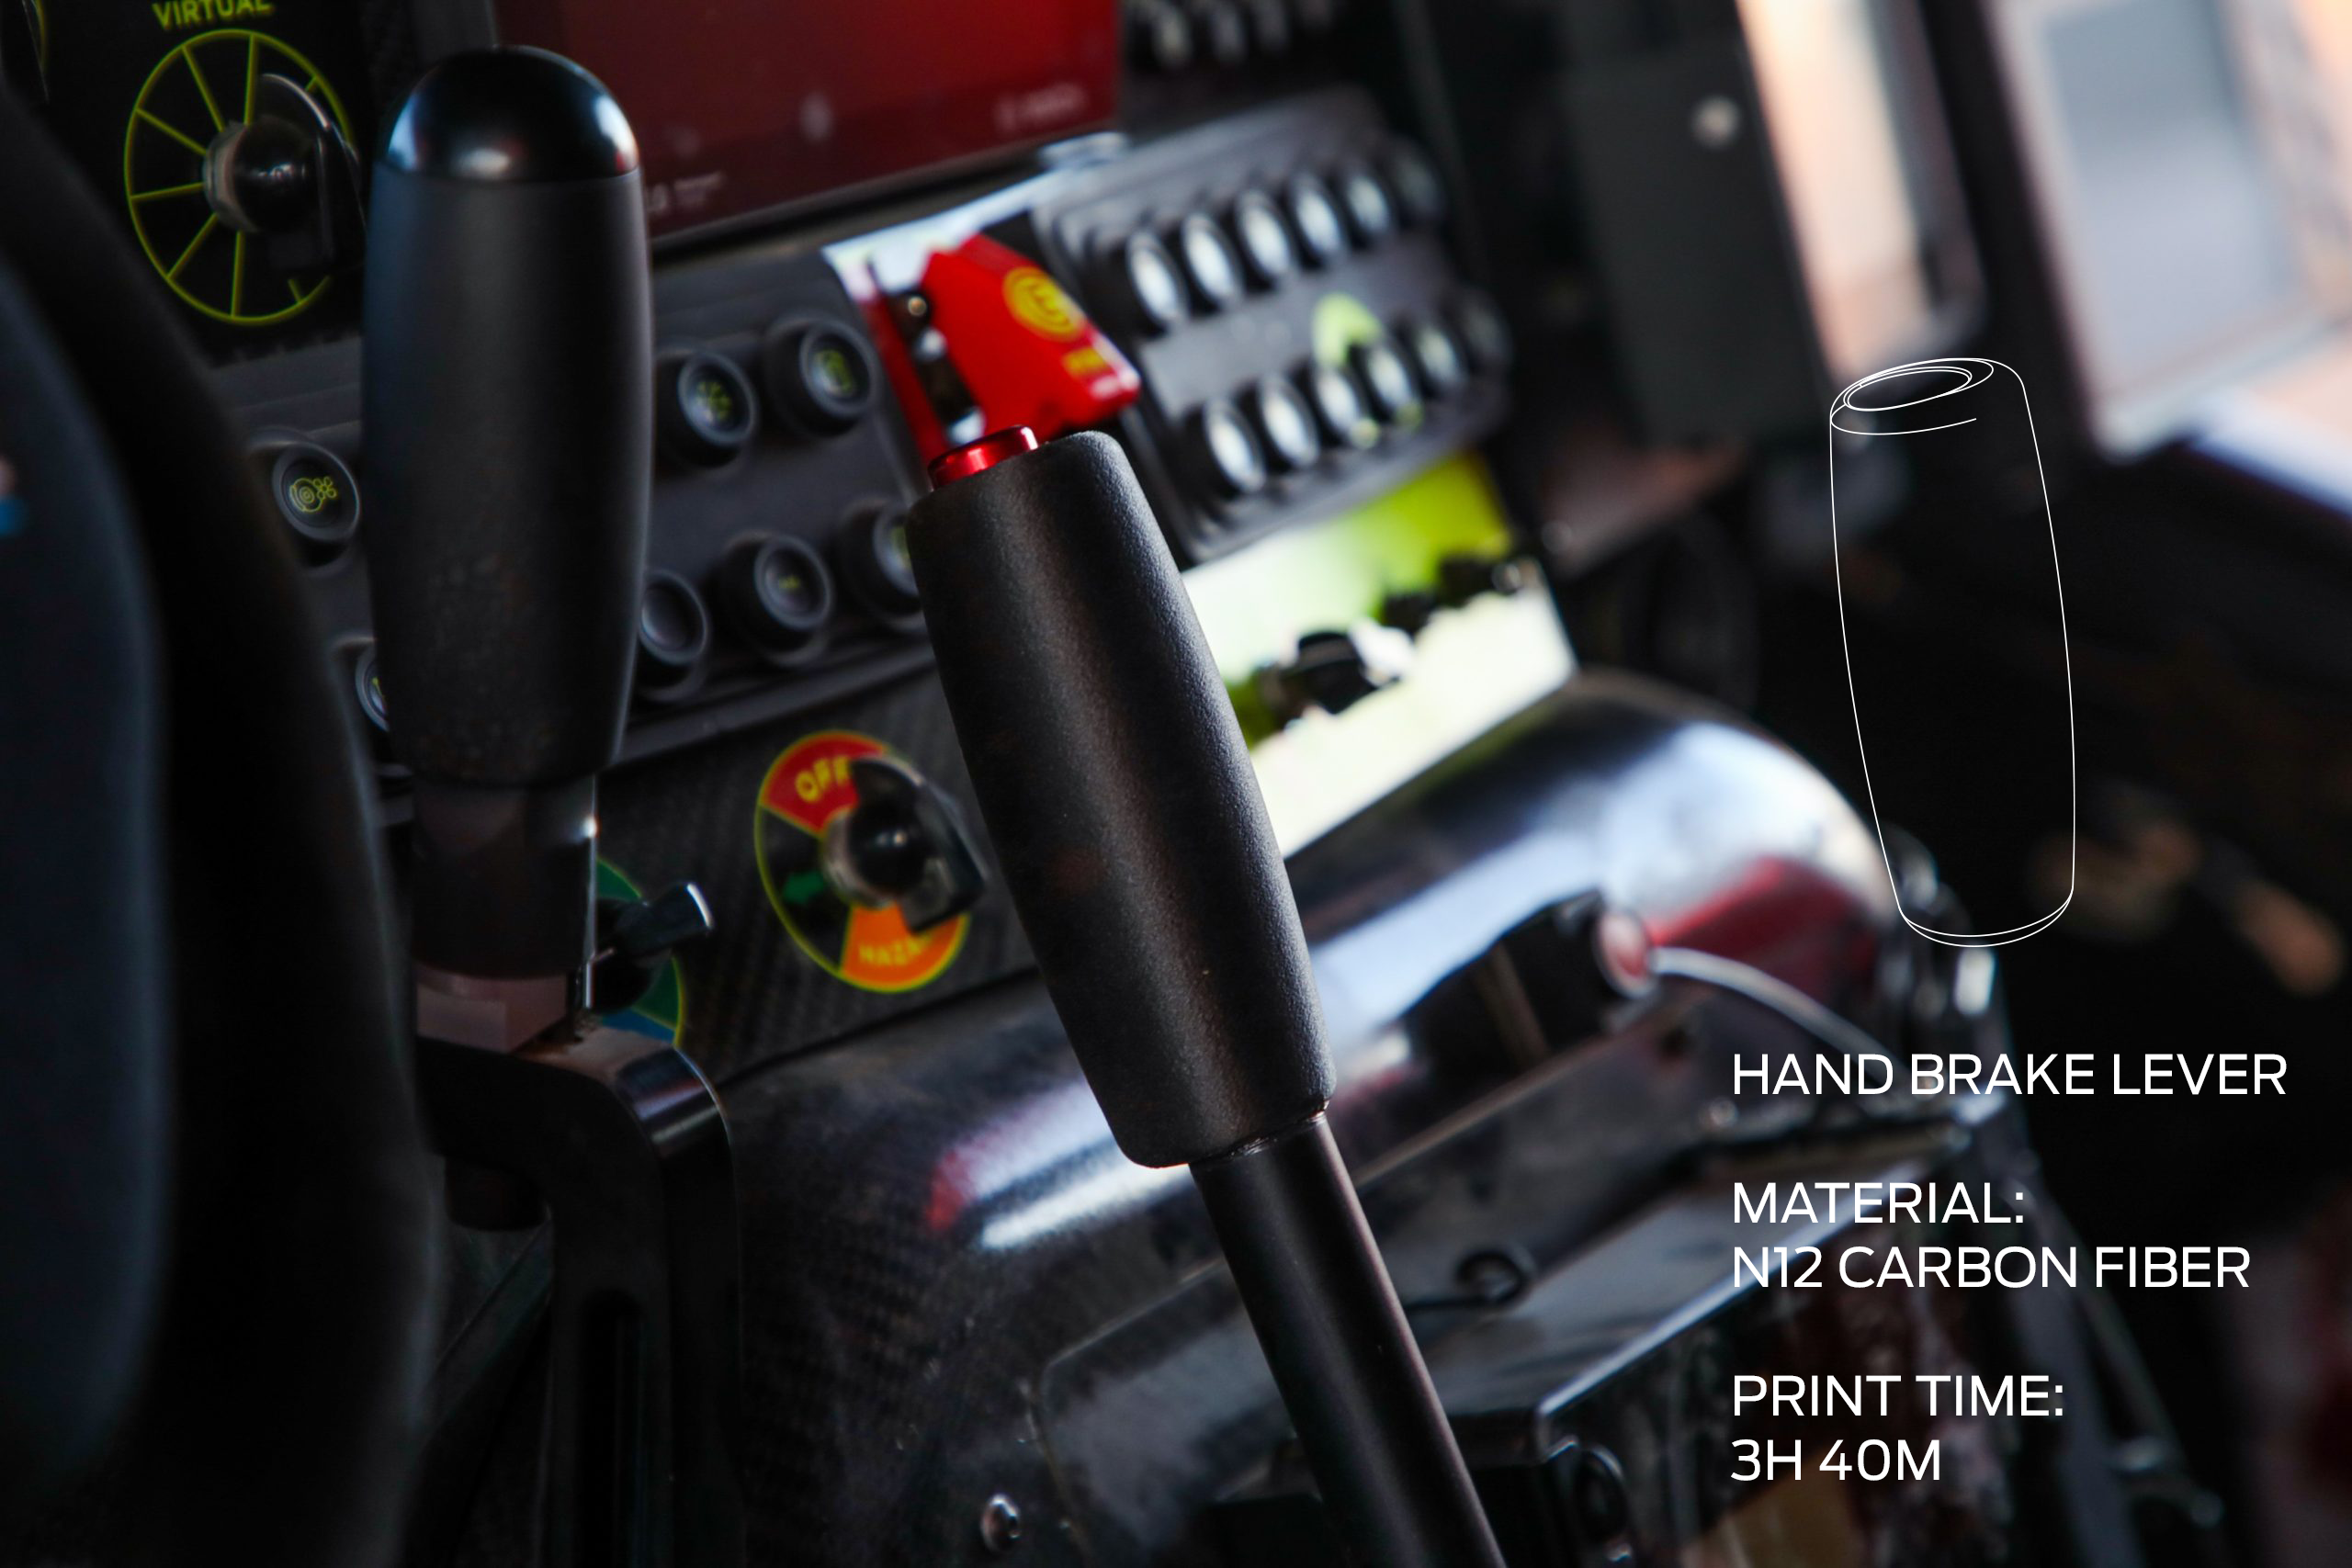 MakerBot 3D Printer